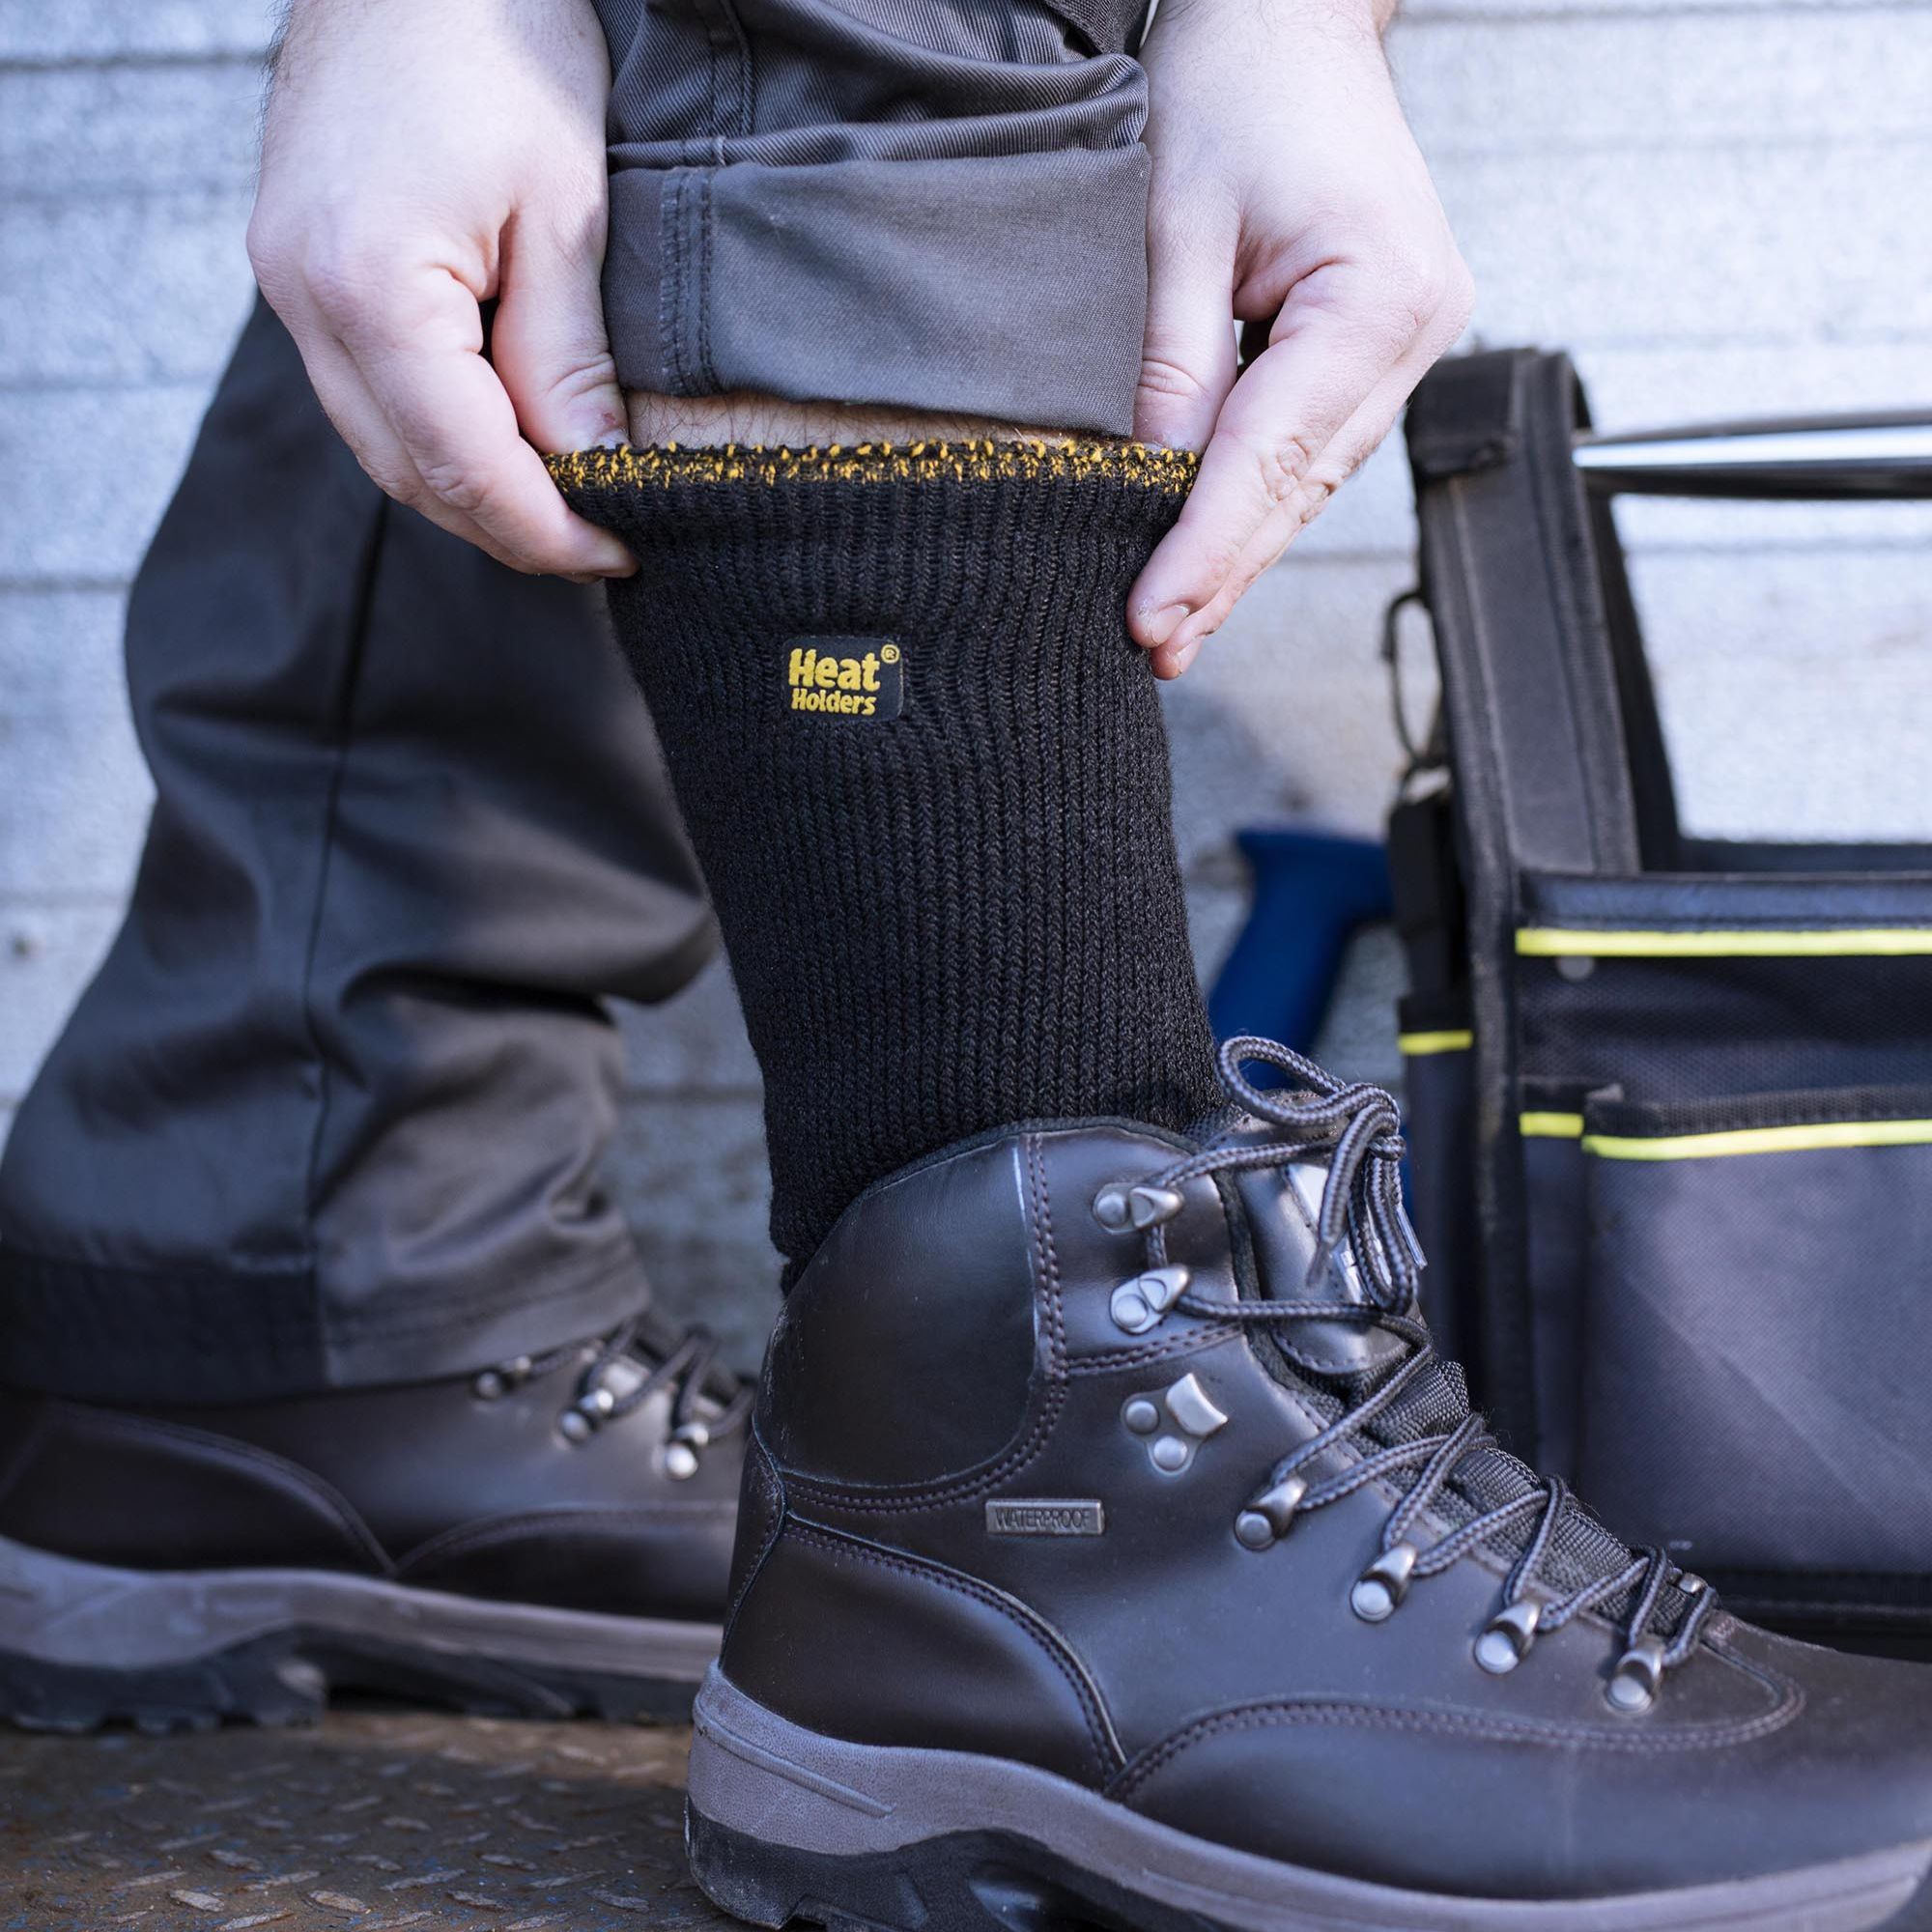 Heat Holders - Men's workforce Reinforced Heel and Toe Work Boot Socks